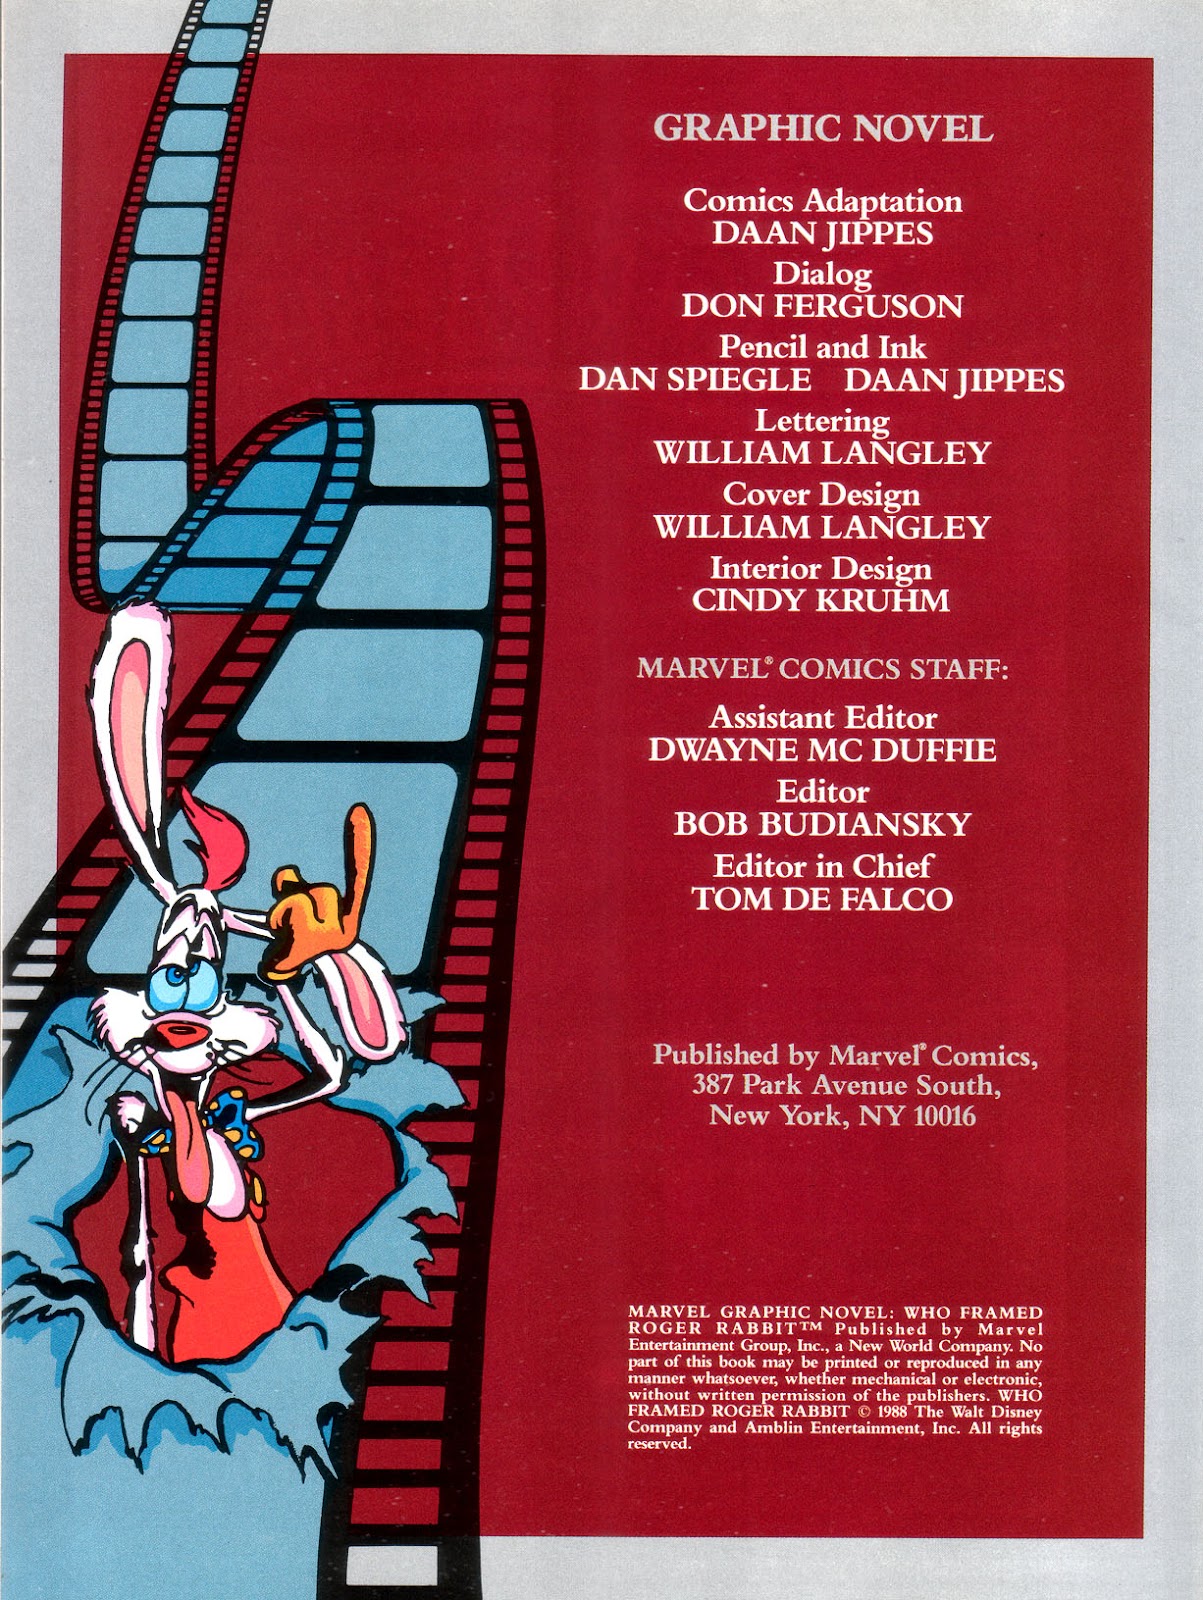 Marvel Graphic Novel issue 41 - Who Framed Roger Rabbit - Page 4